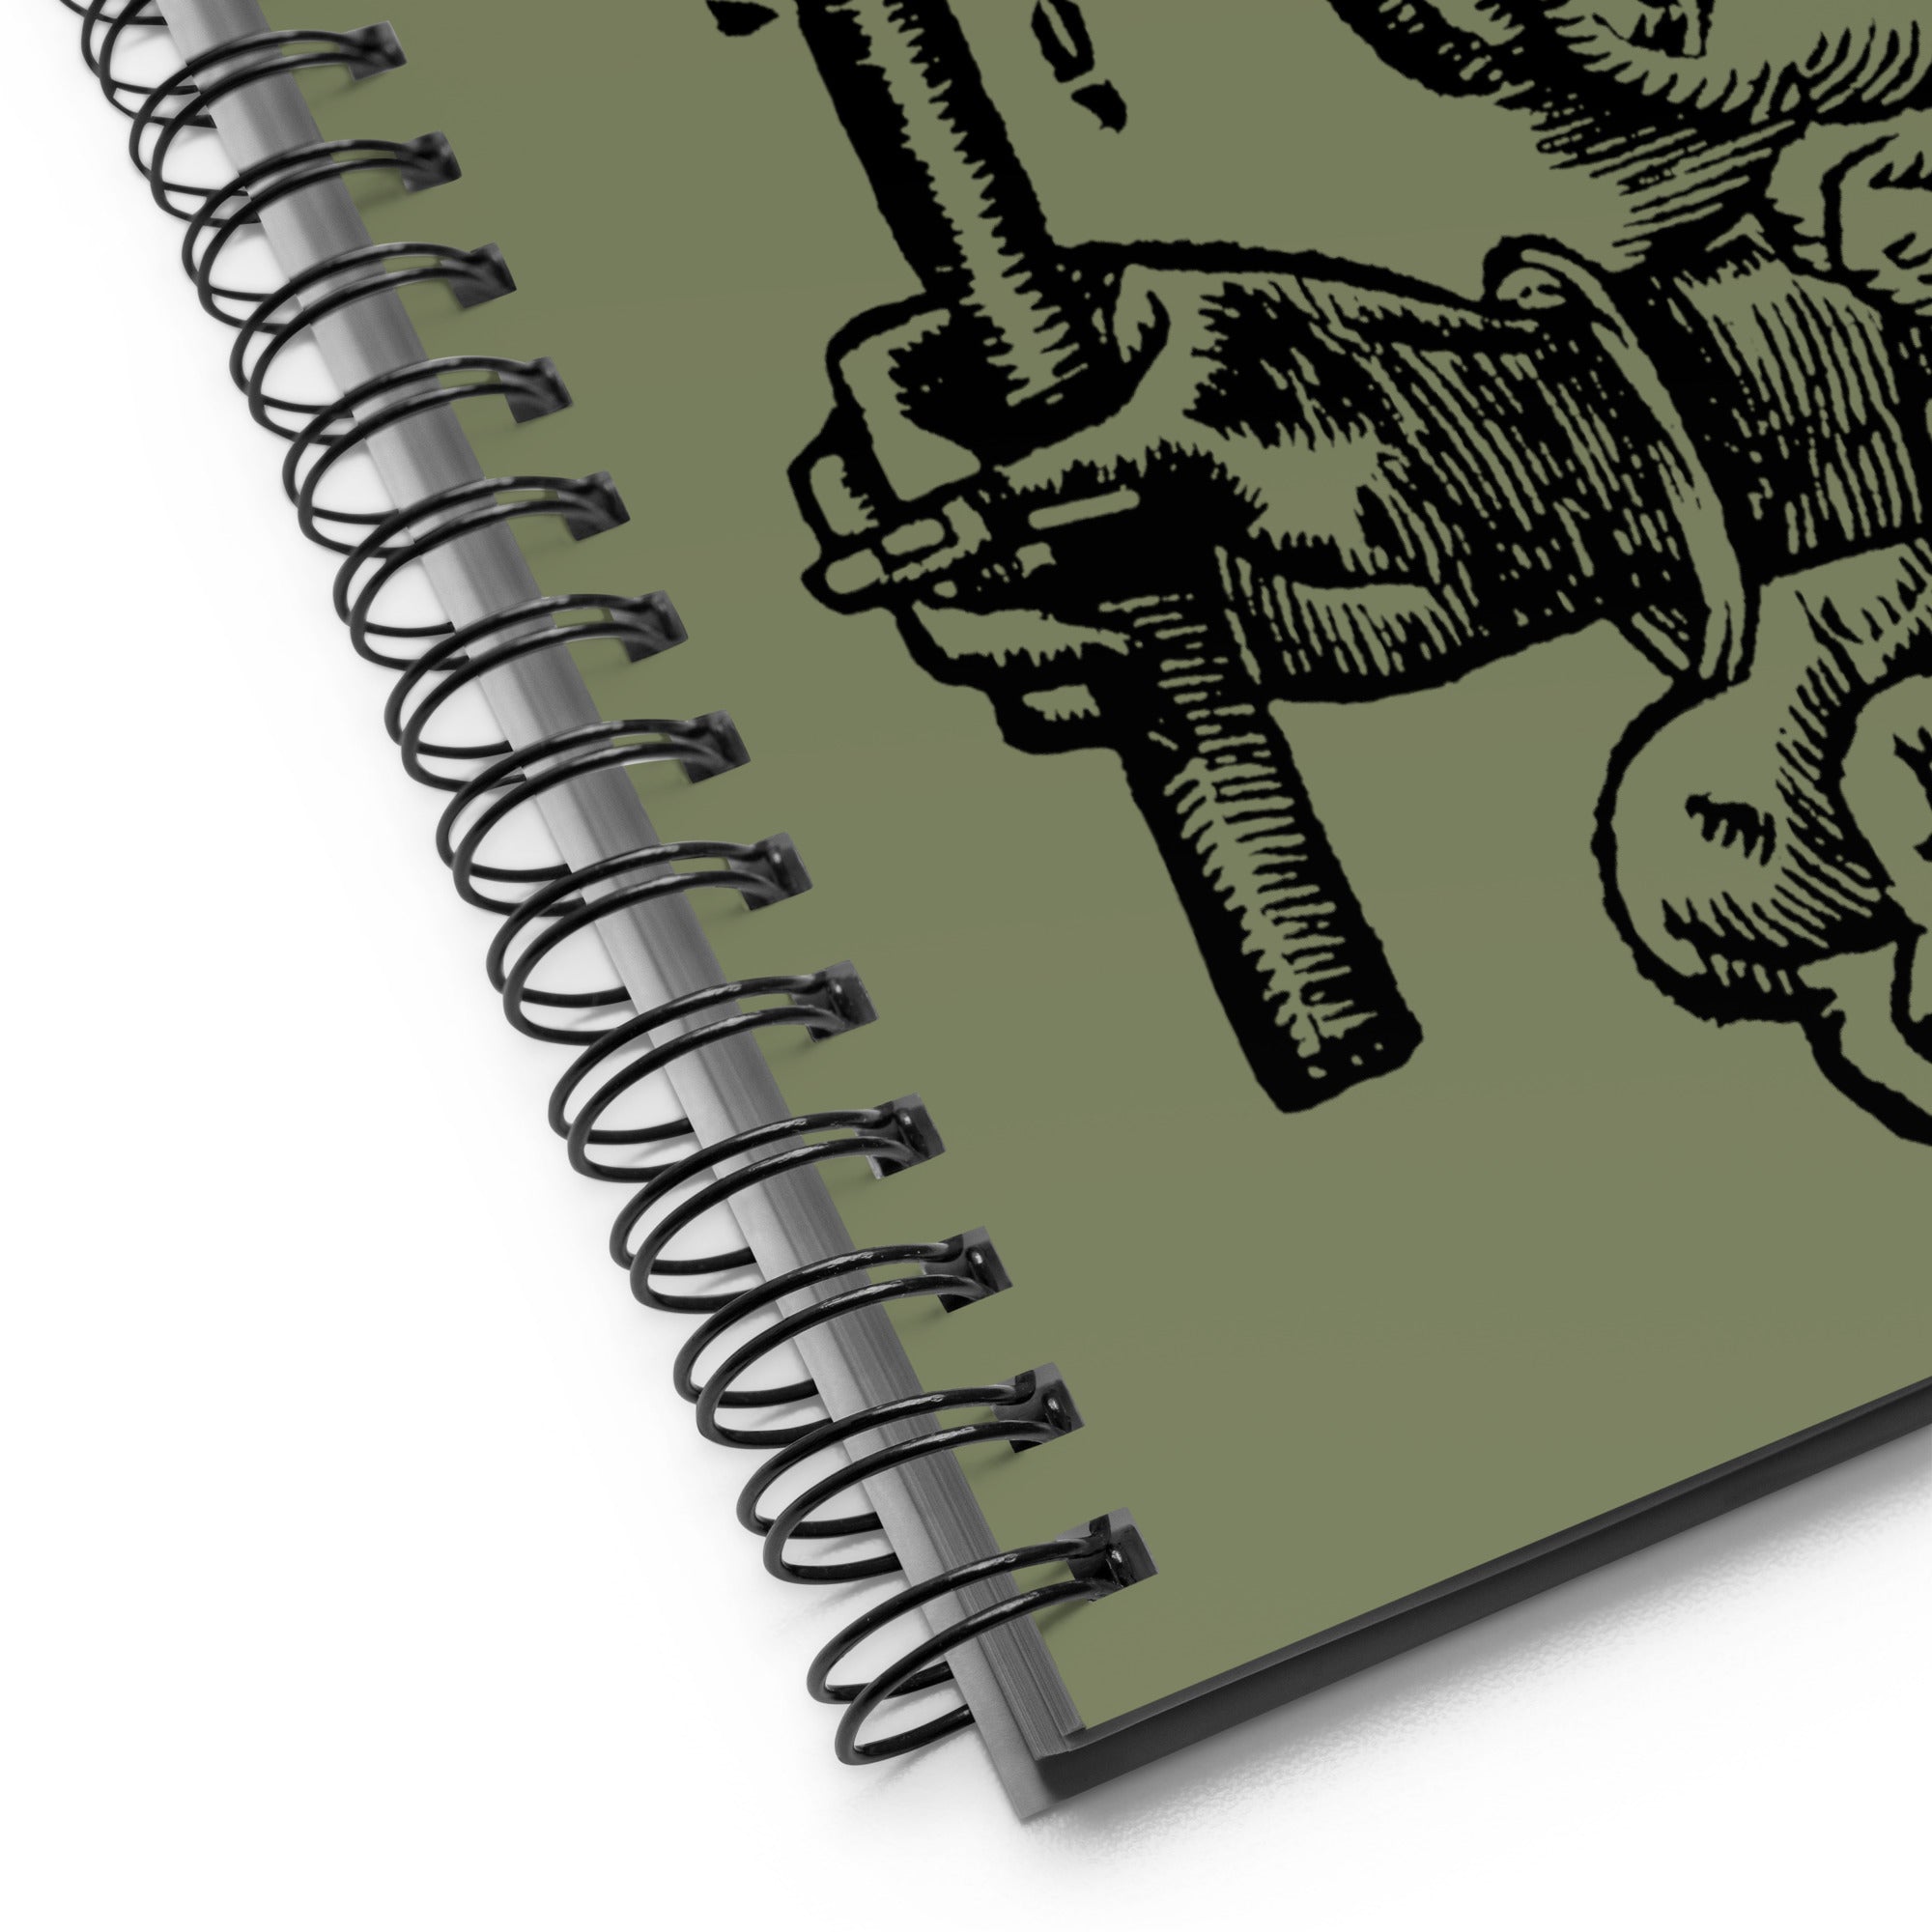 Discipline Bestows Liberty Spiral Notebook